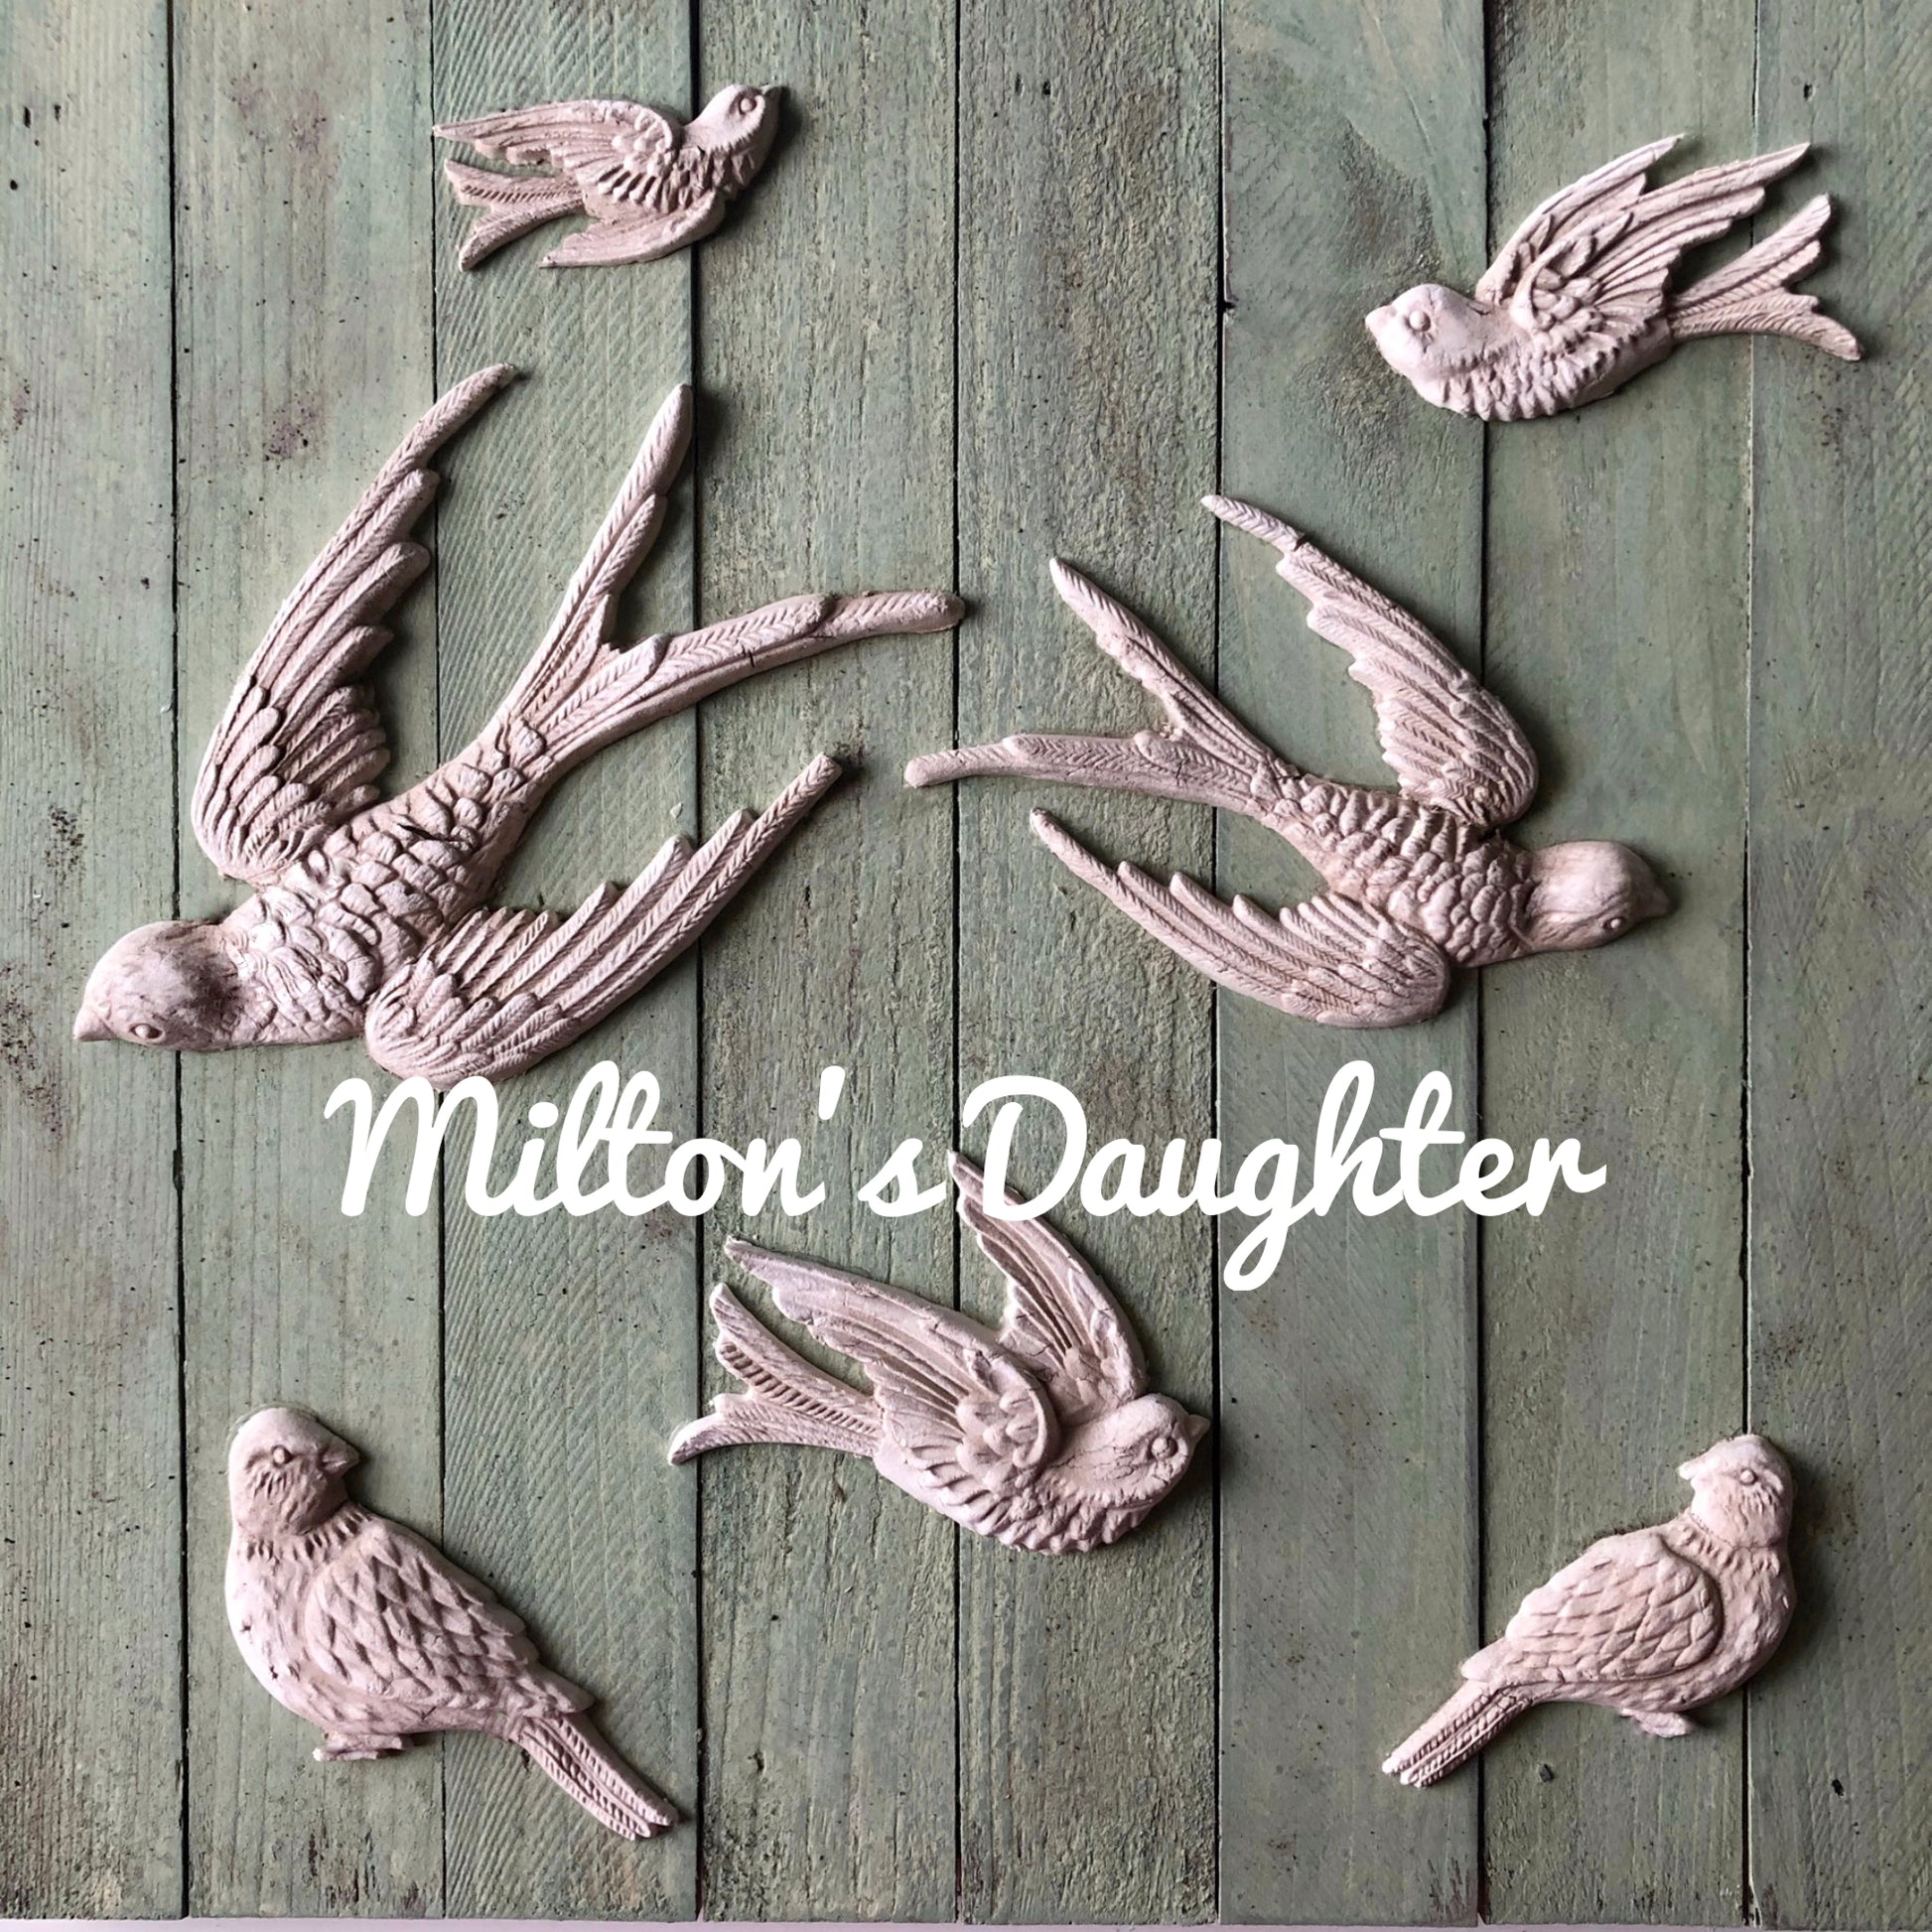 IOD Birdsong mold multiple bird castings at Milton's Daughter